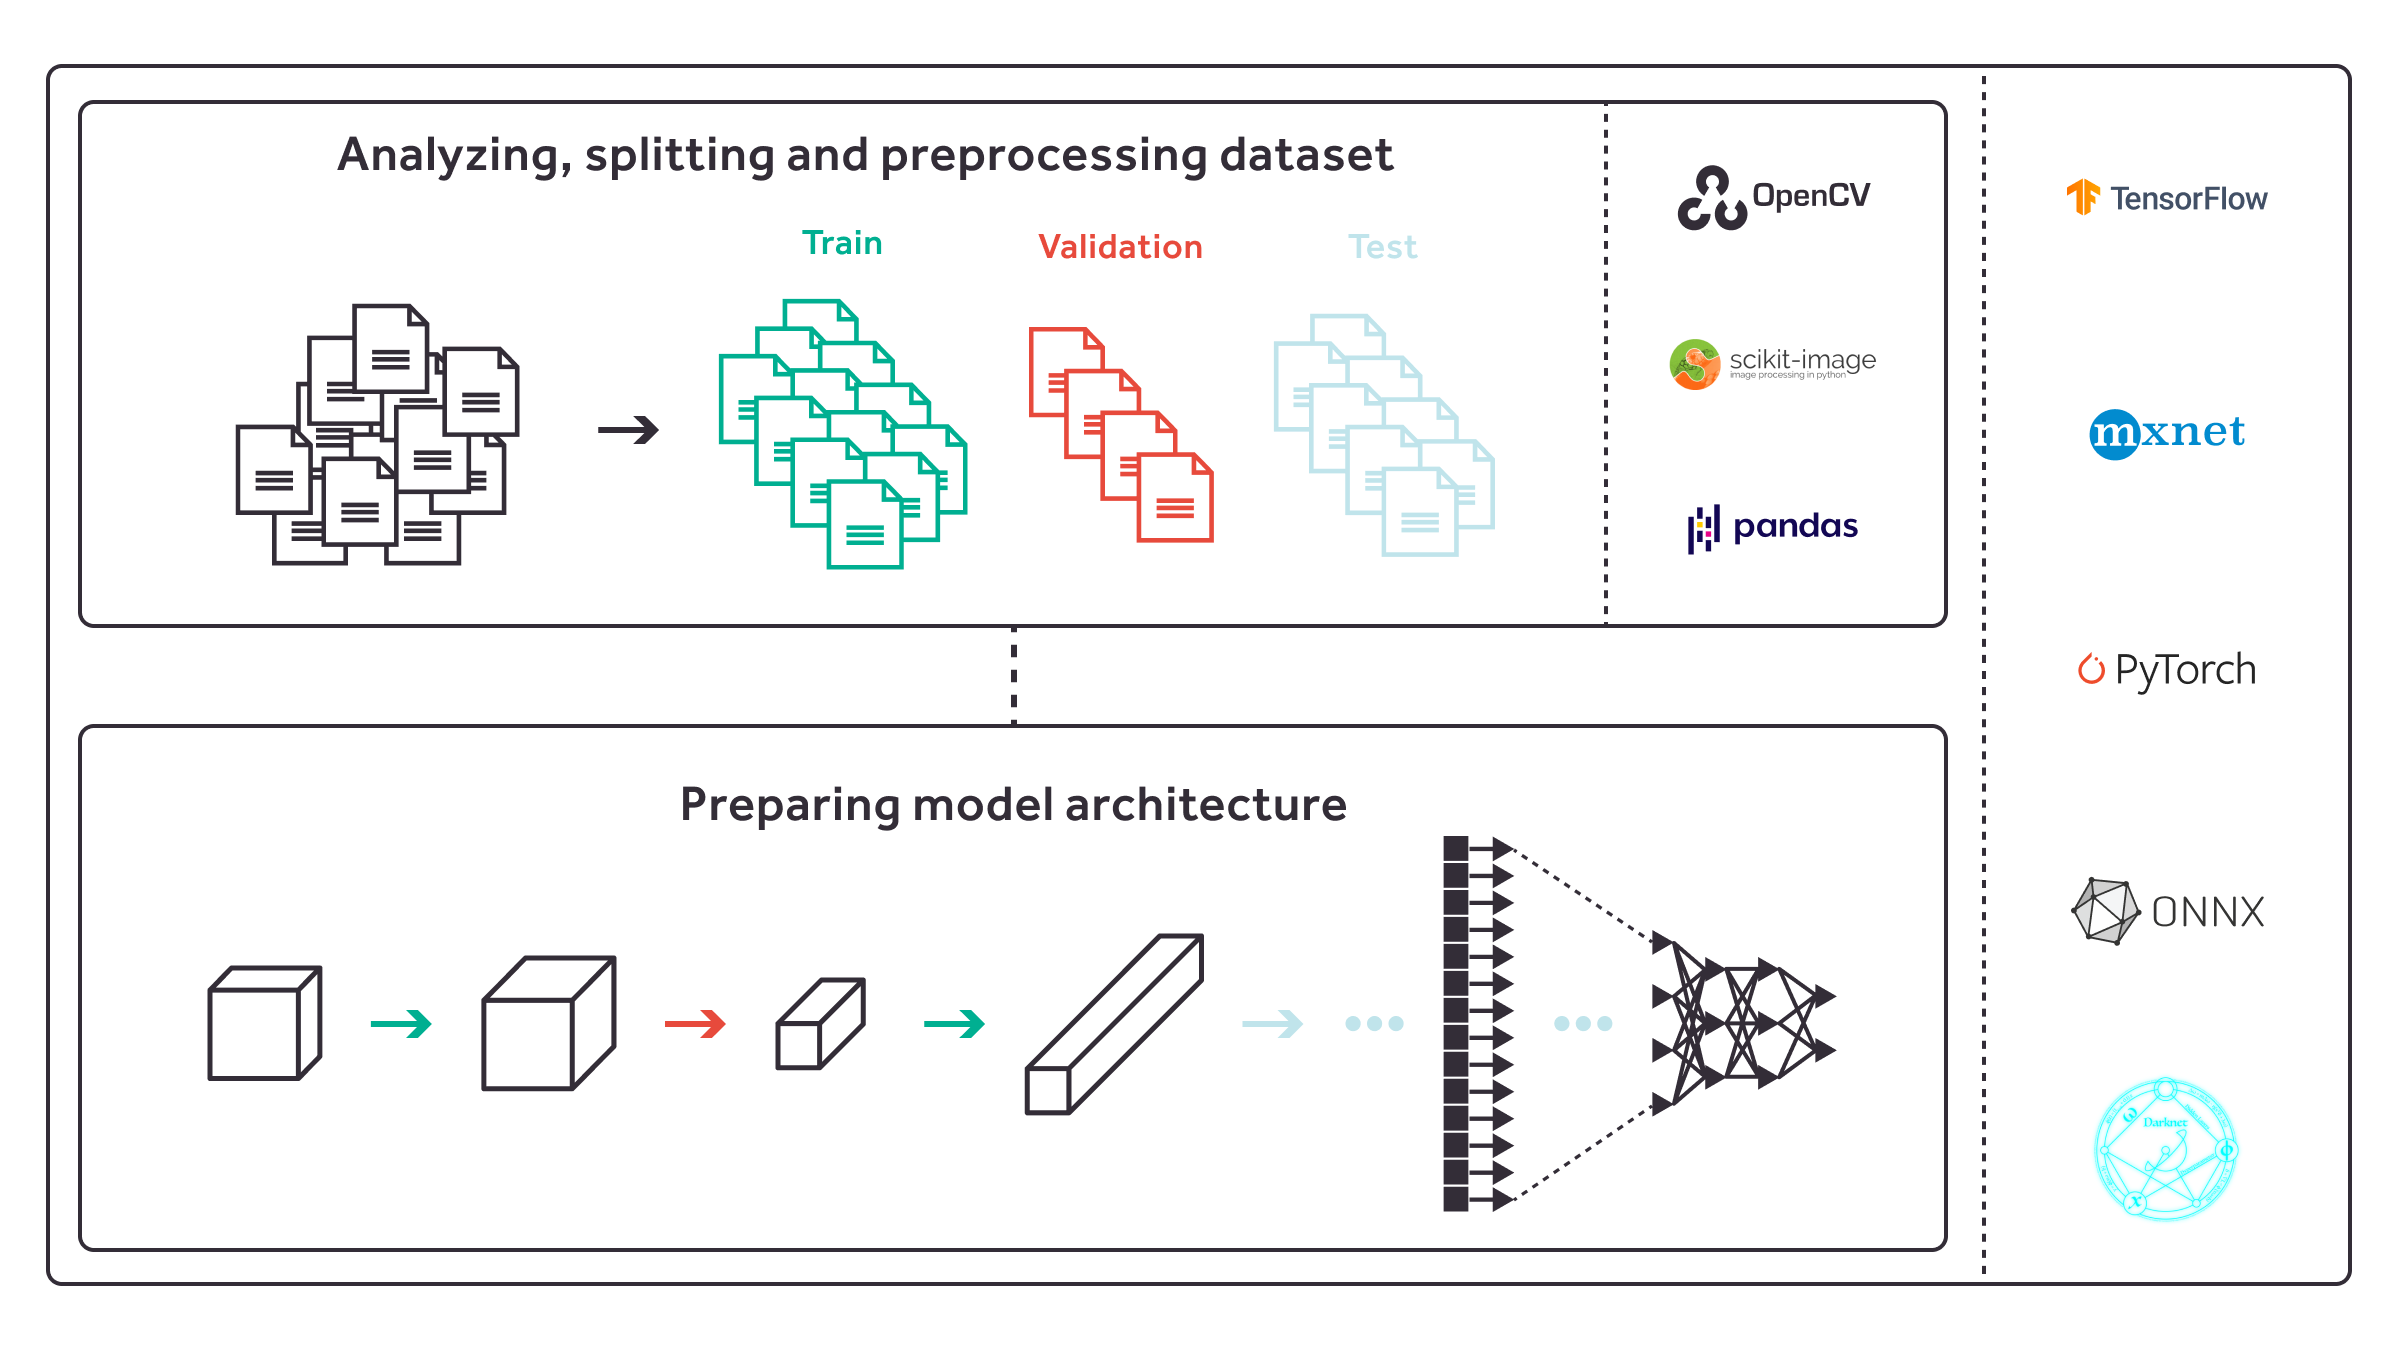 Analyzing, spliiting and preprocessing dataset diagram